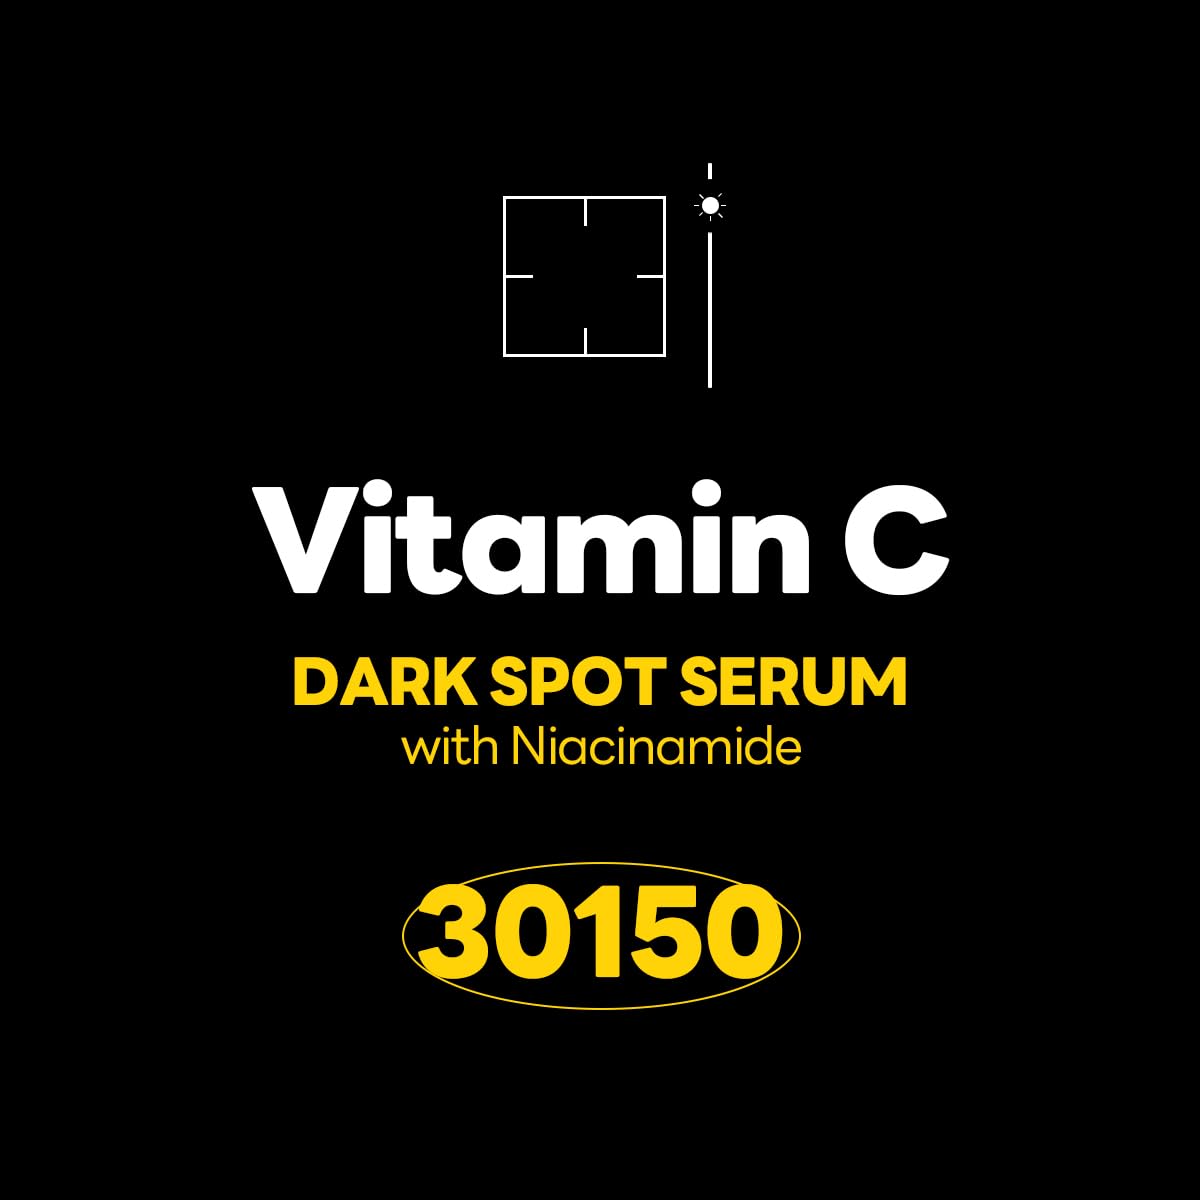 Mediheal Vitamin C Brightening Serum 40ml / 1.35 fl oz